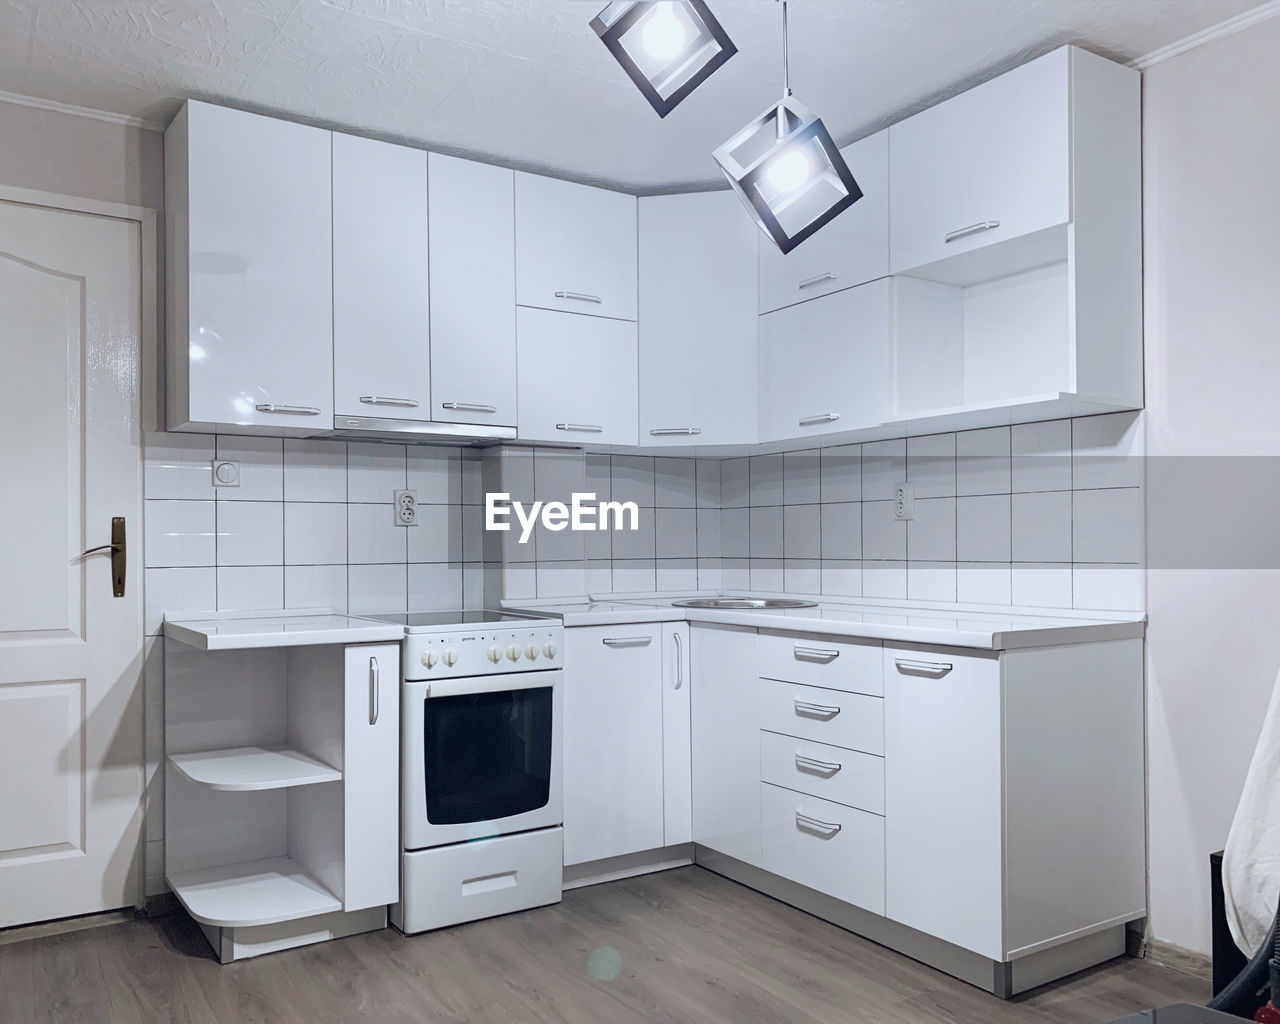 A modern, white, new kitchen with dark floor in a home